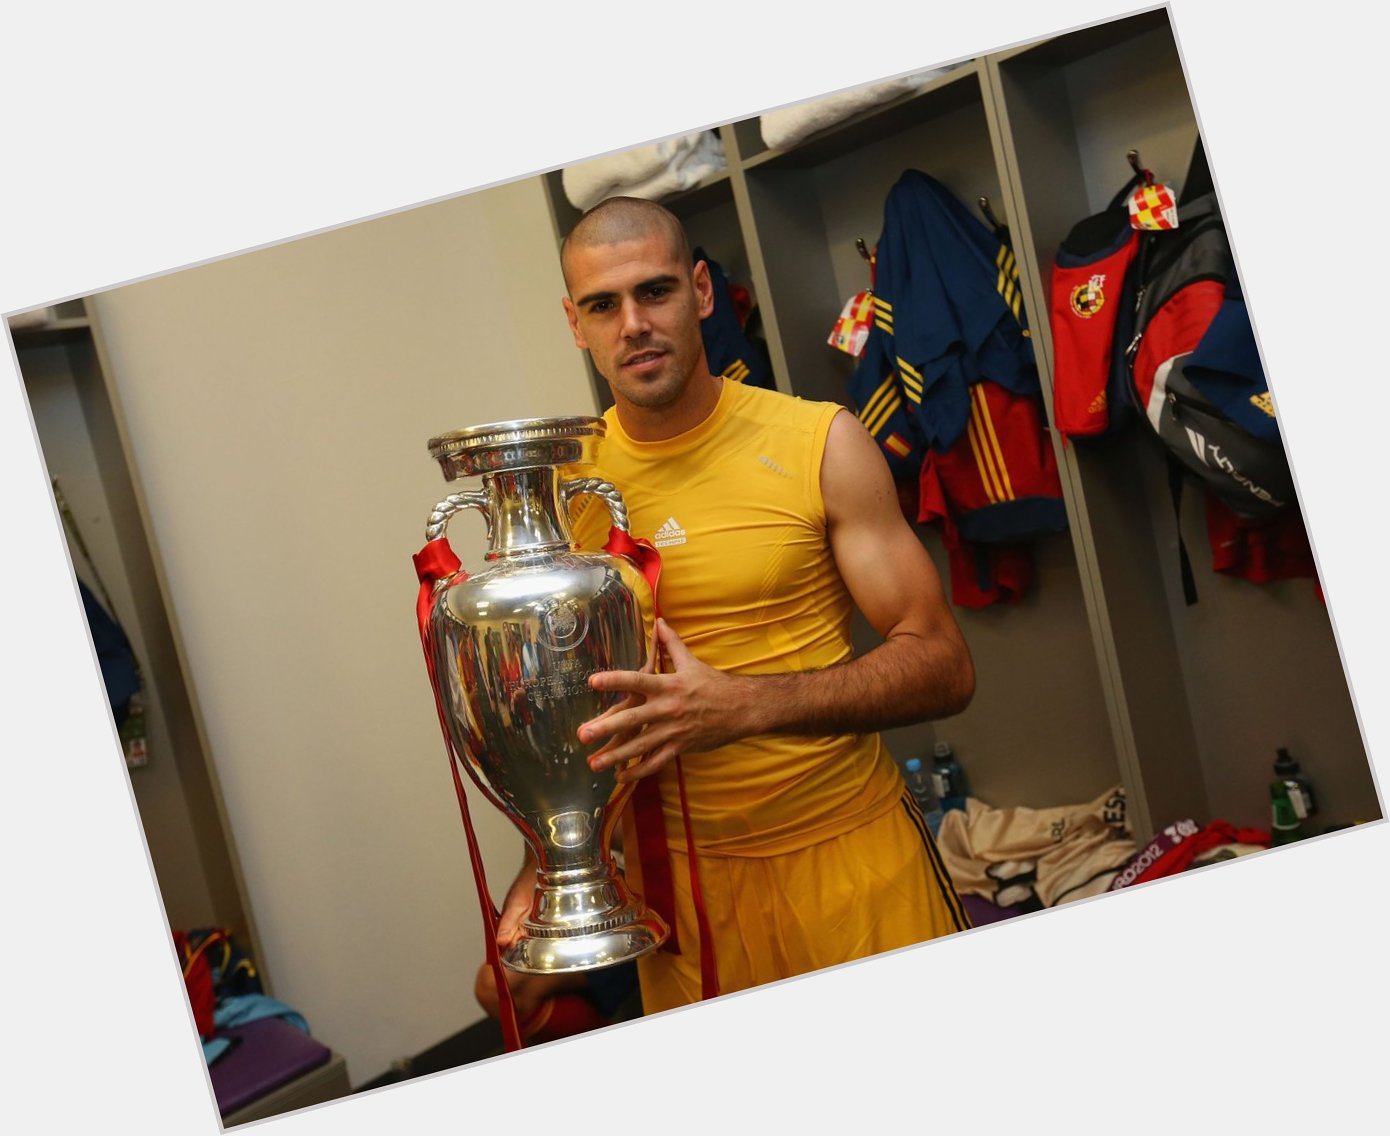  2010 world champion EURO 2012  Happy birthday, Víctor Valdés  